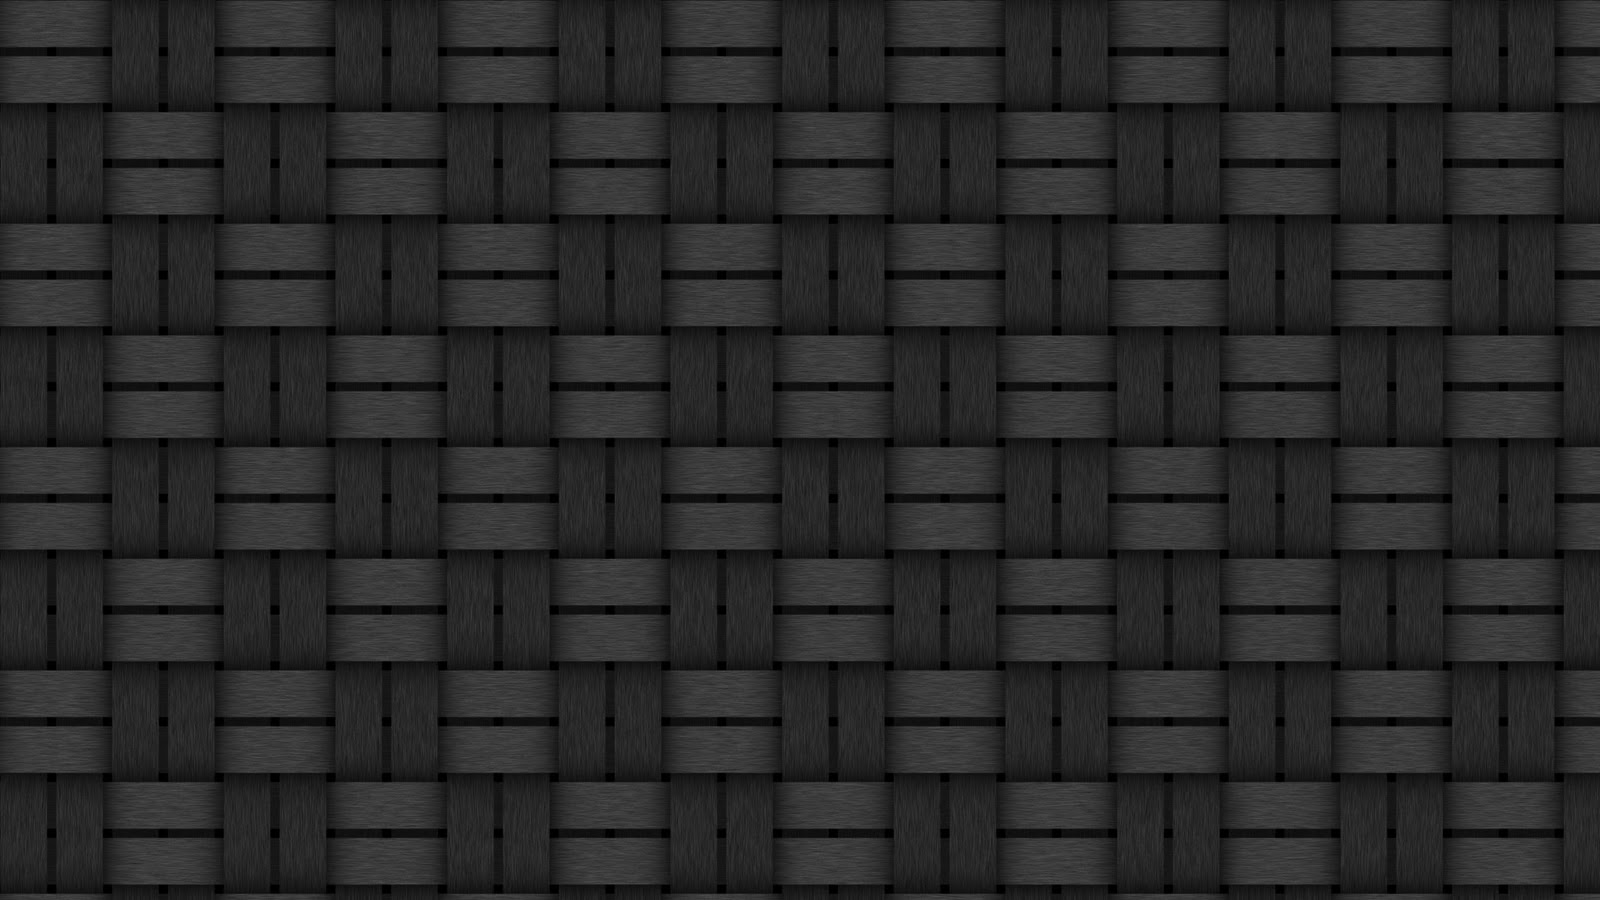 http://2.bp.blogspot.com/-7eAQmqw81ns/UF2iAQ8ieeI/AAAAAAAAAHk/4V0QmQXVE8s/s1600/Black-squares-weaved-wallpaper-backgroun-image.jpg